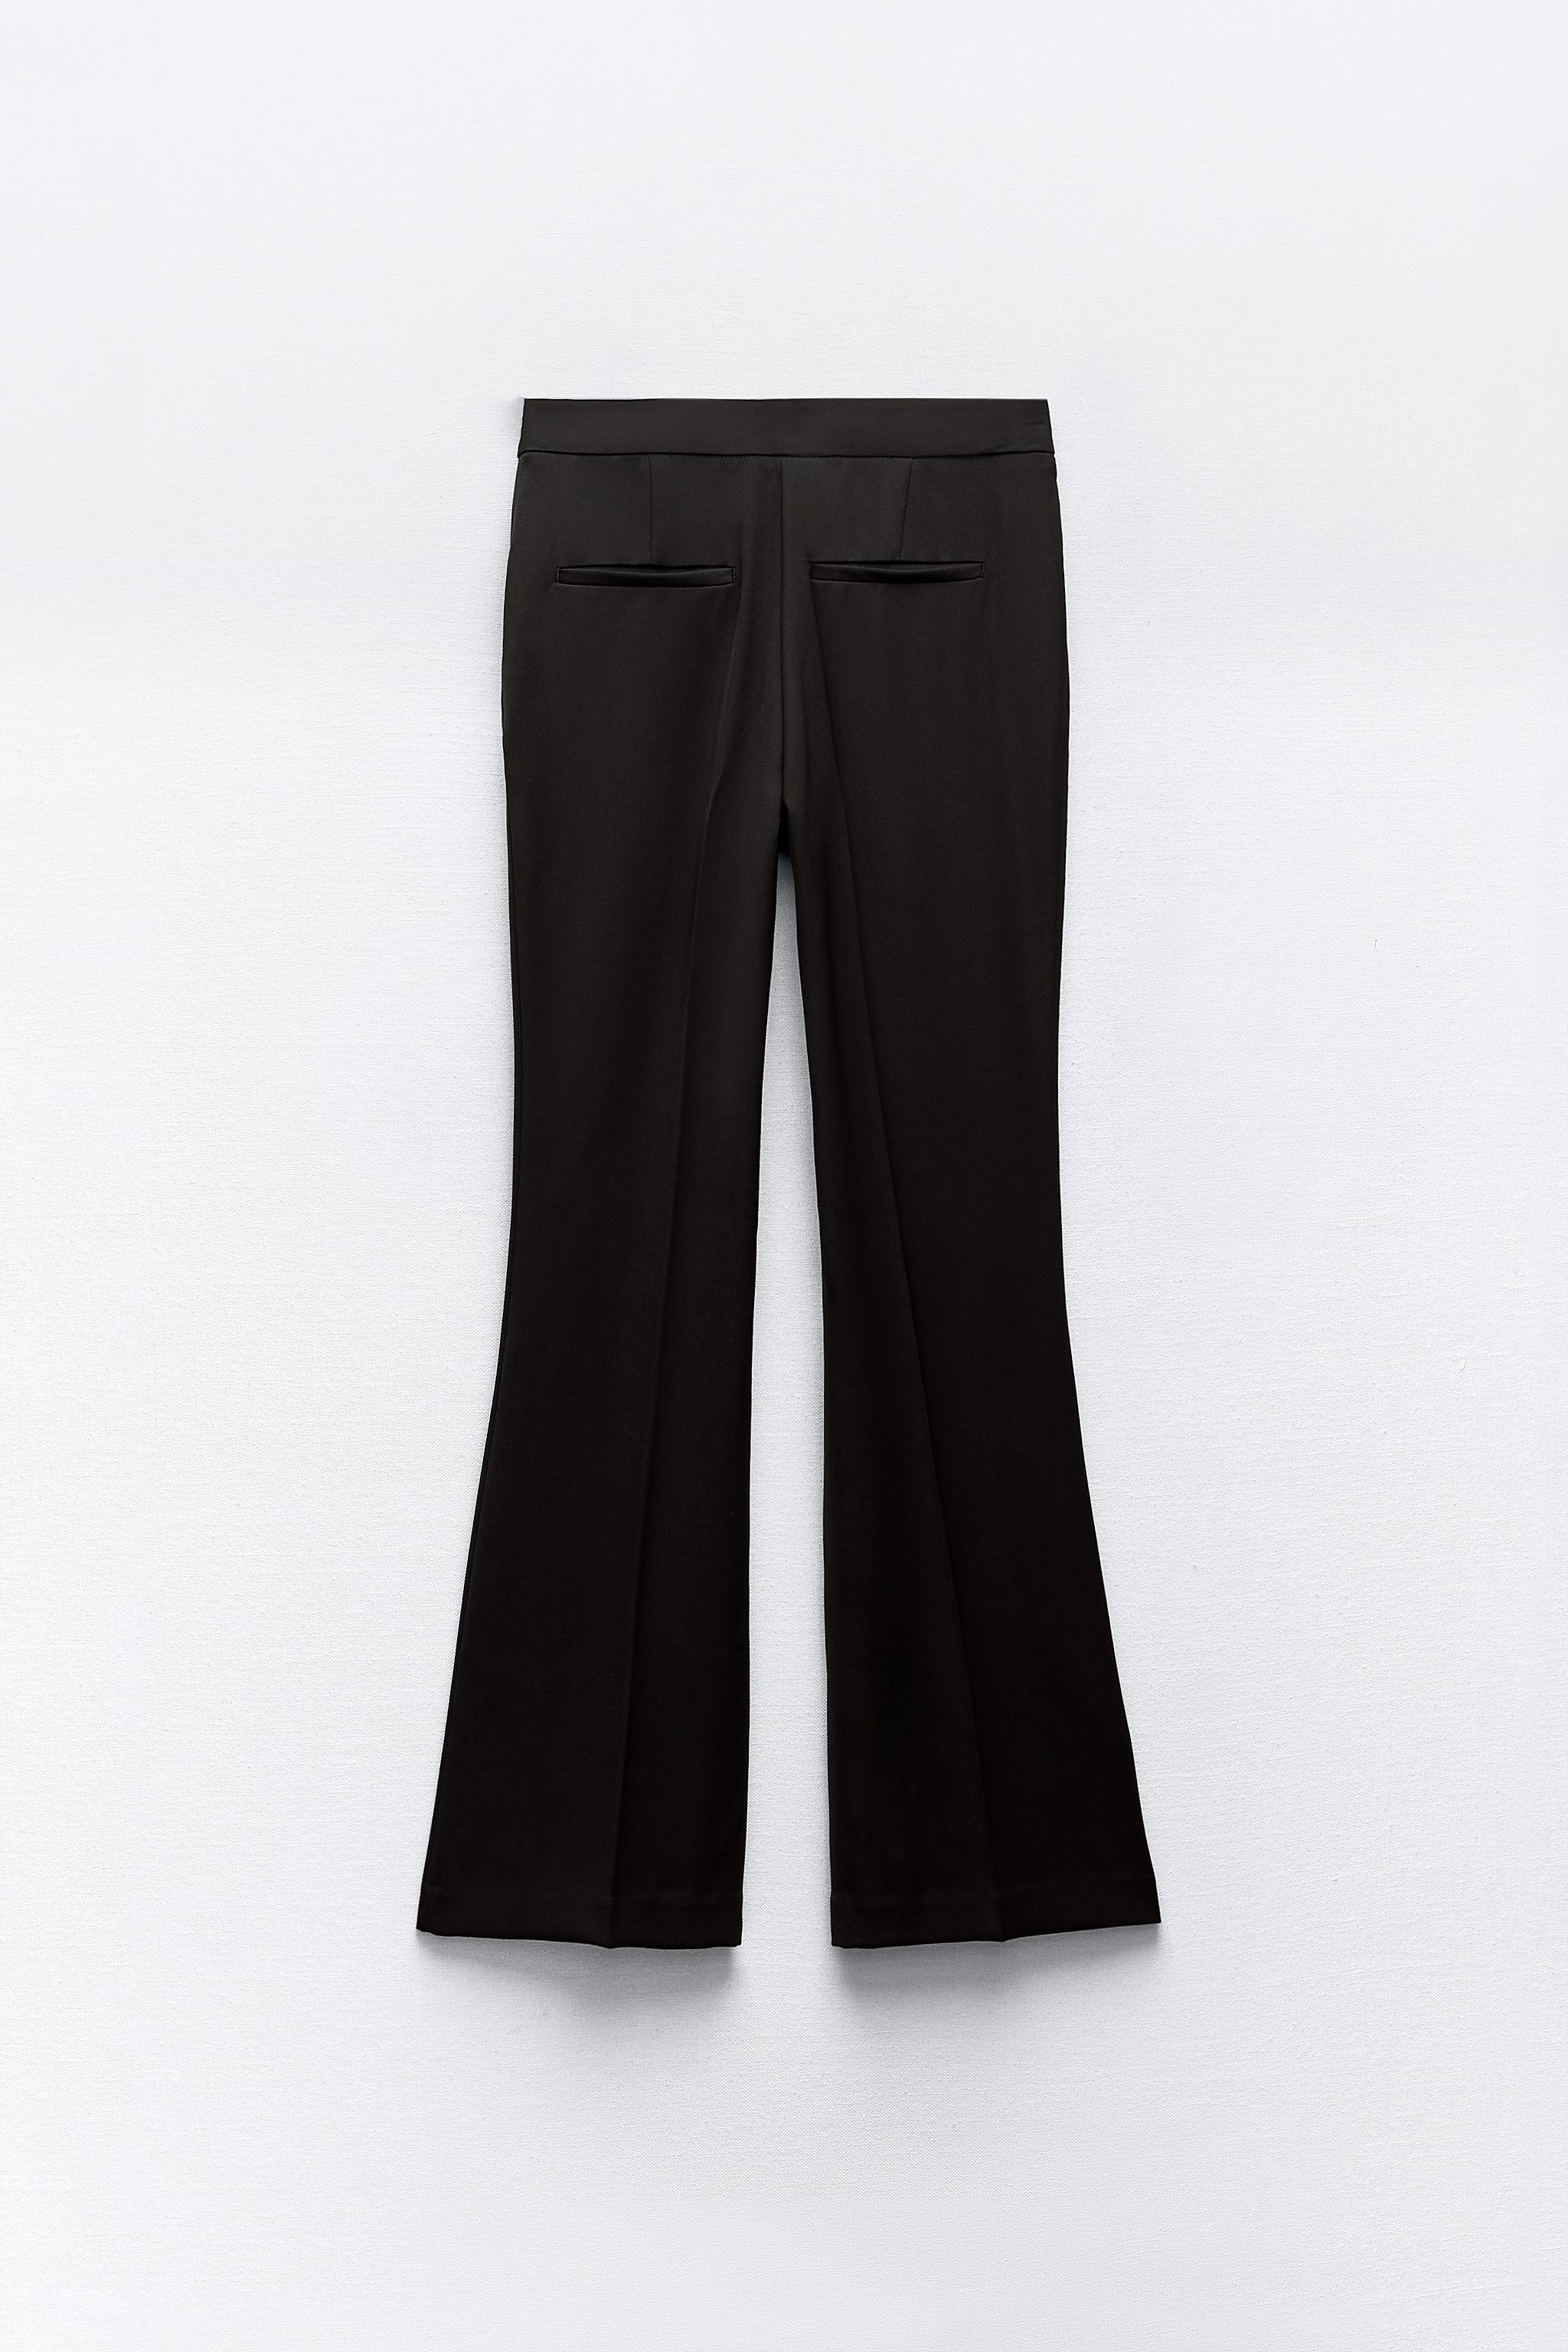 Zara High Waisted Trousers Pants size XXL